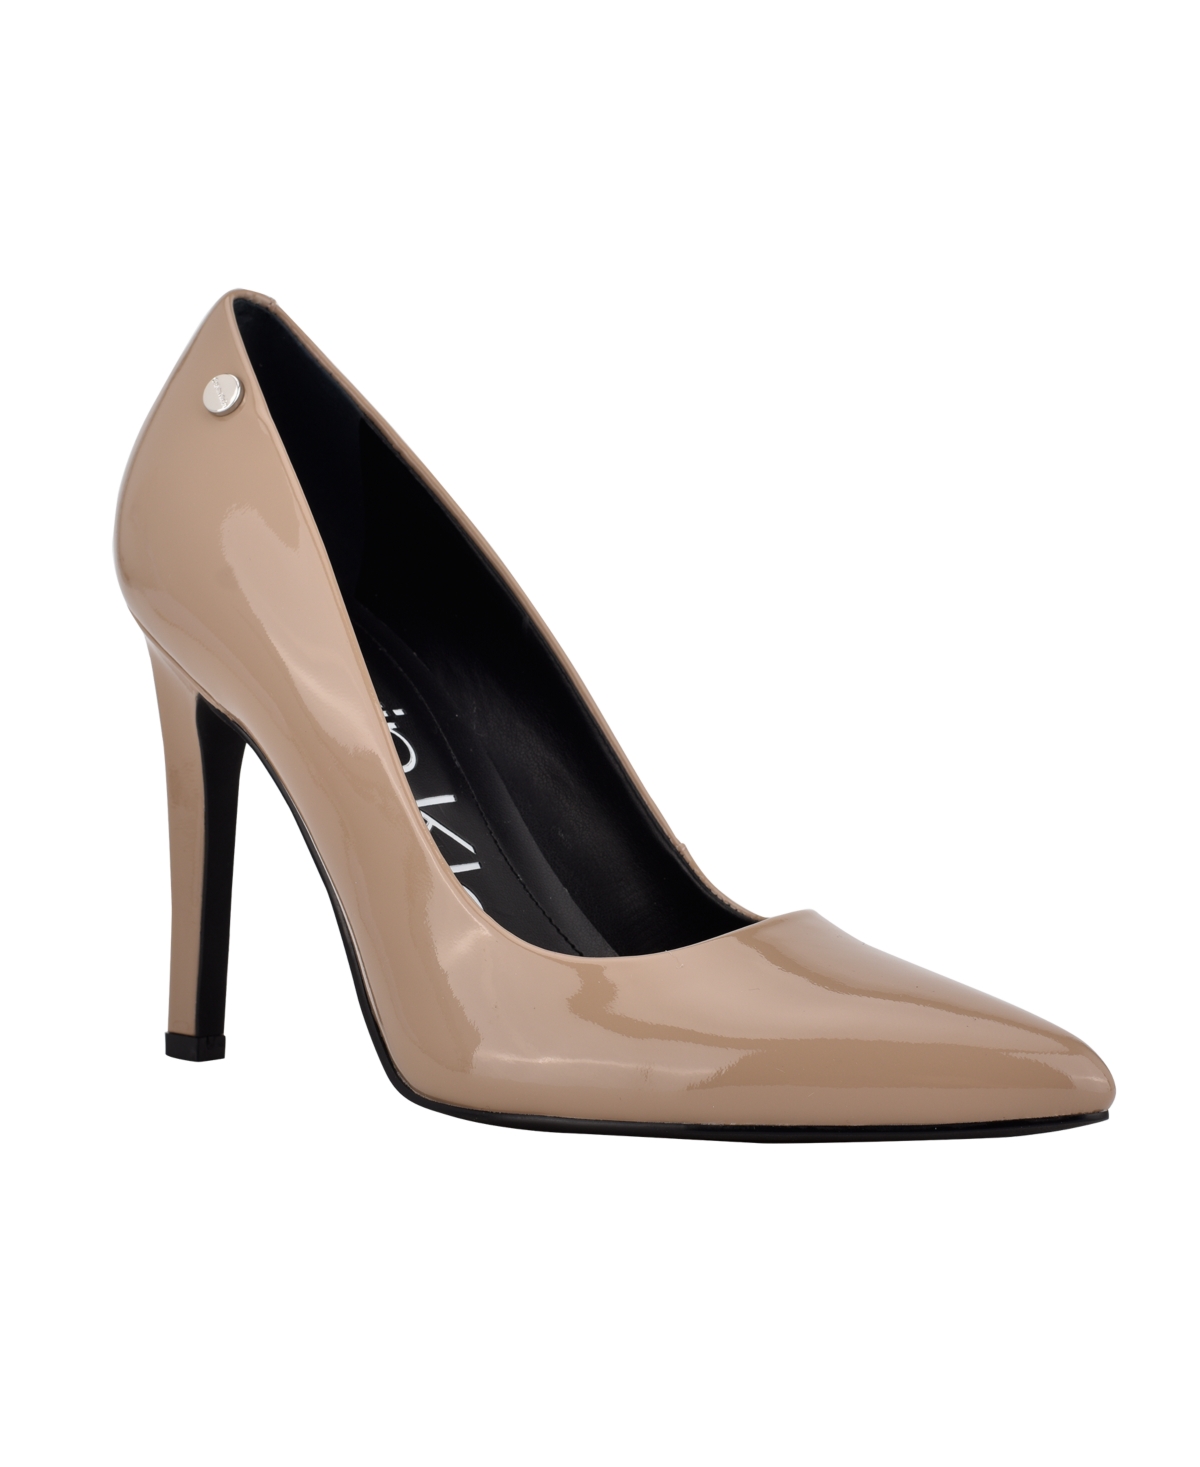 Calvin Klein Women's Brady Pumps & Reviews - Heels & Pumps - Shoes - Macy's